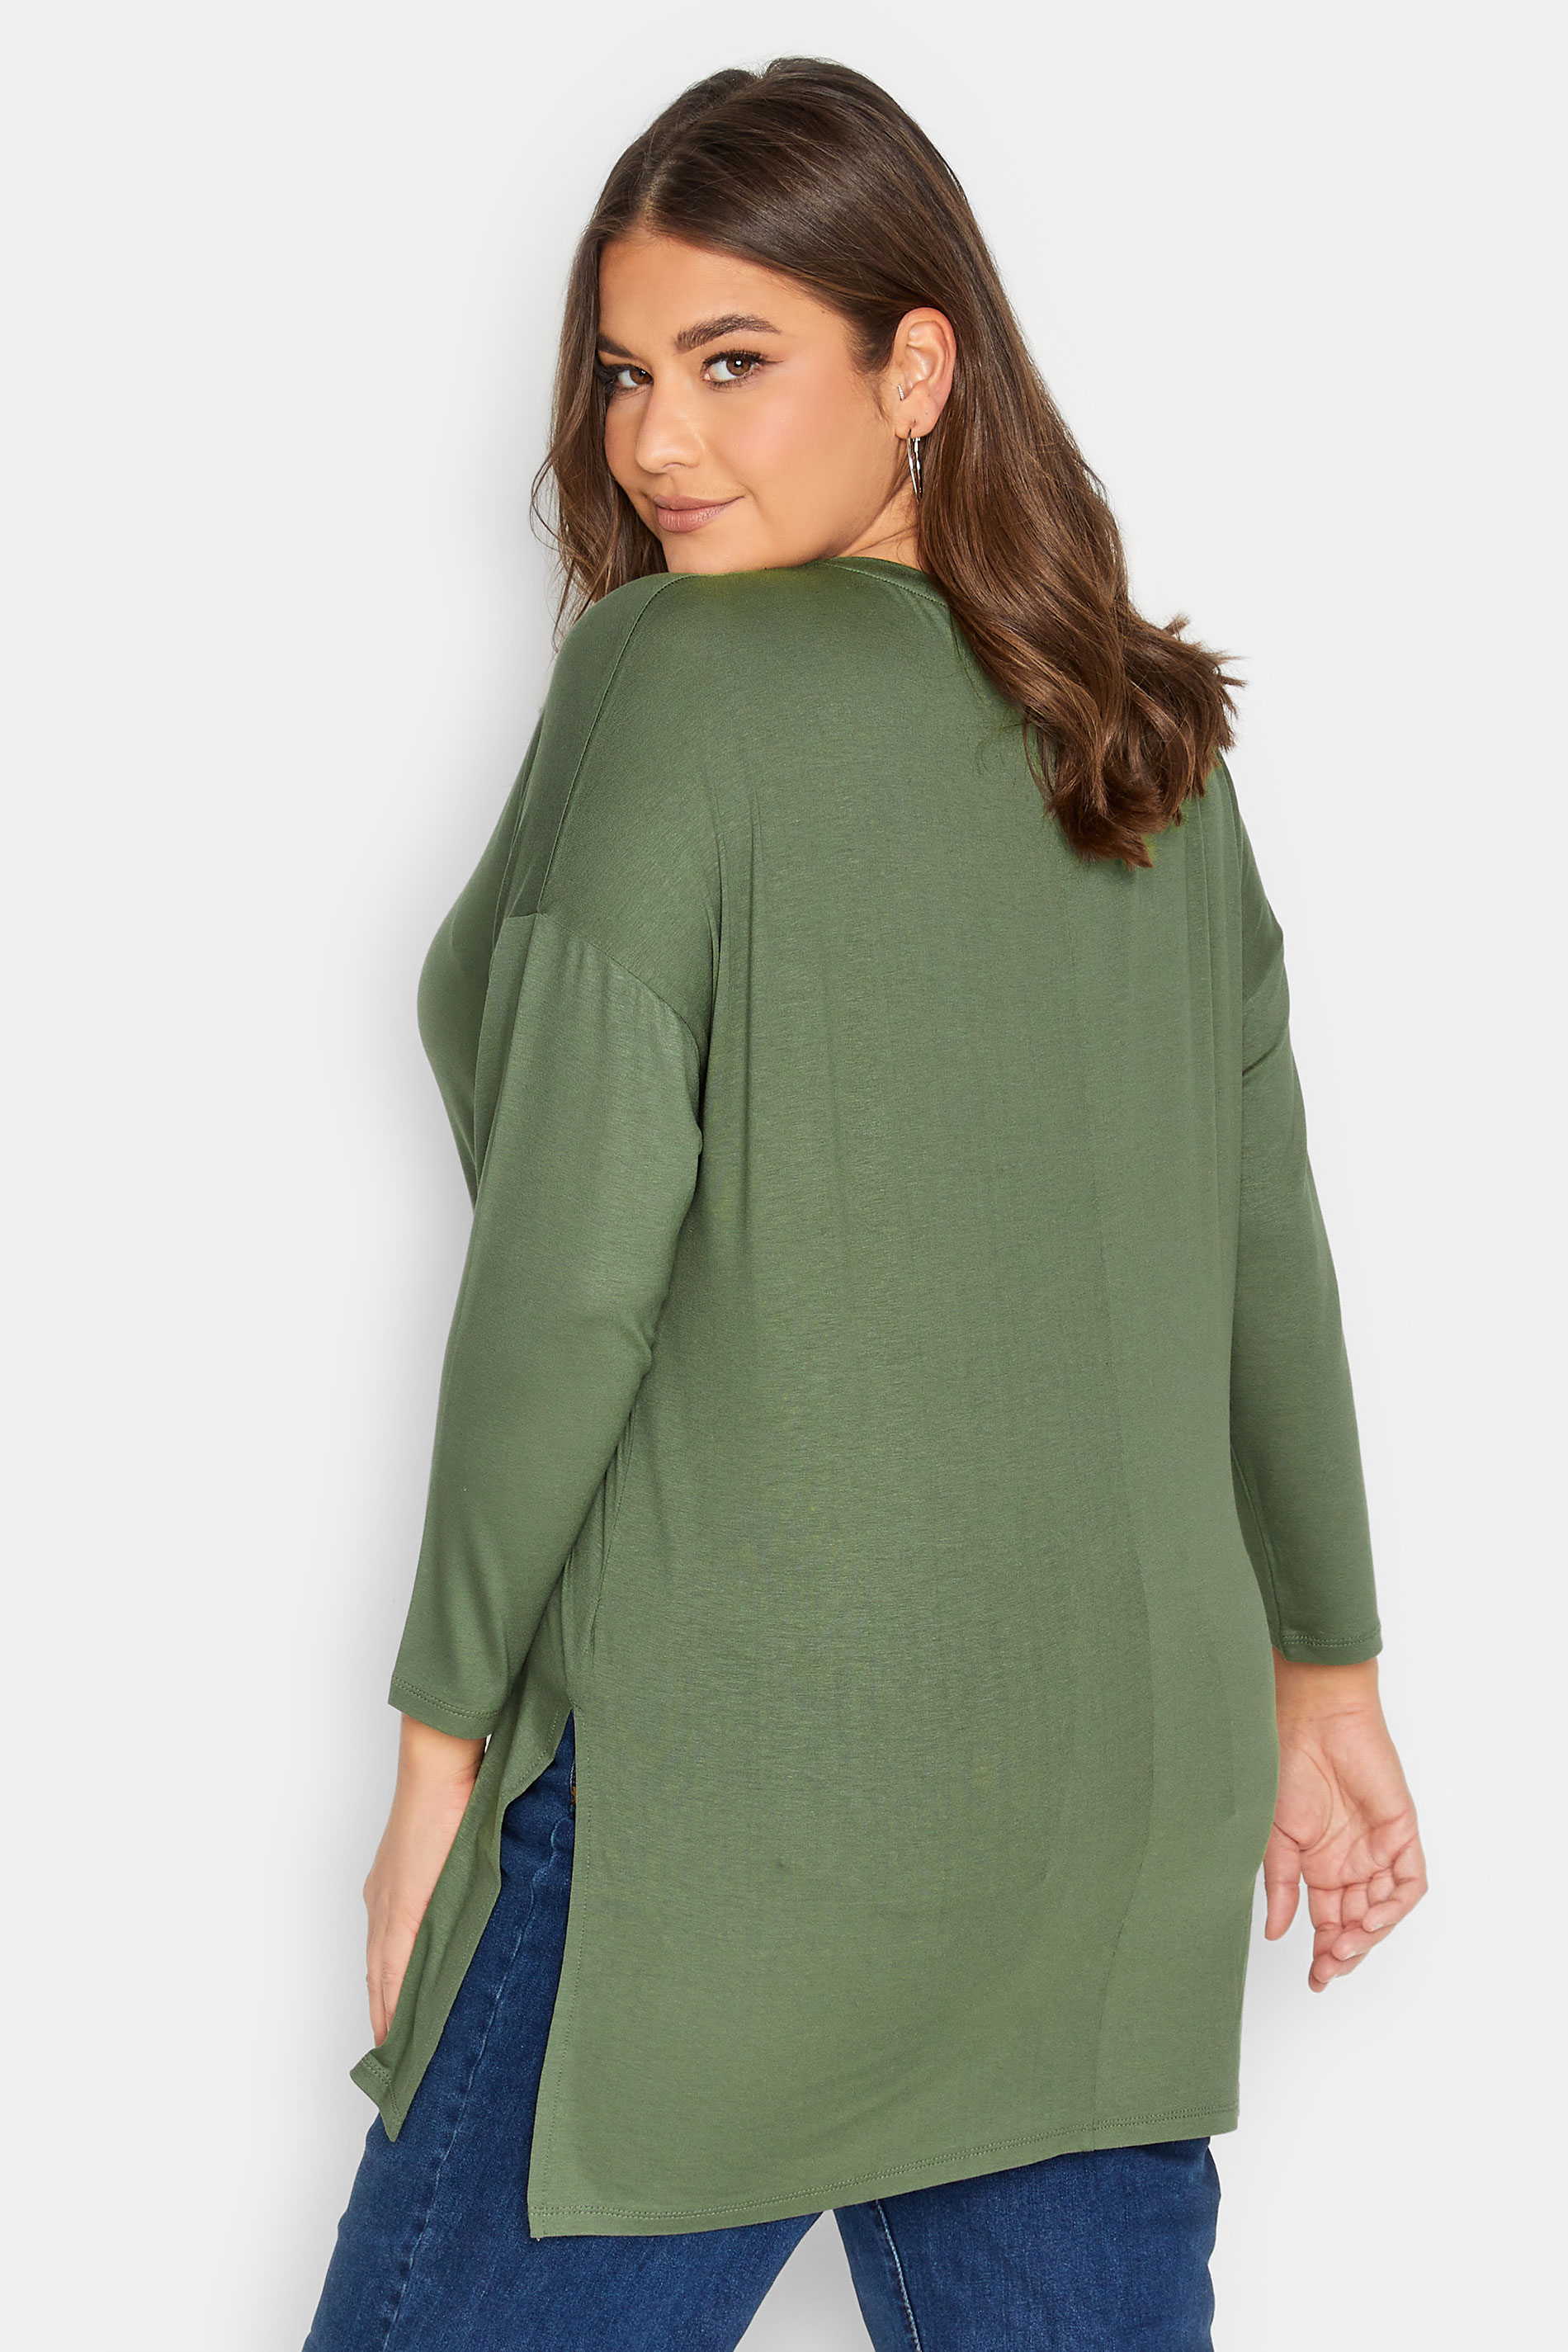 YOURS Plus Size Khaki Green Side Split Oversized T-Shirt | Yours Clothing  3